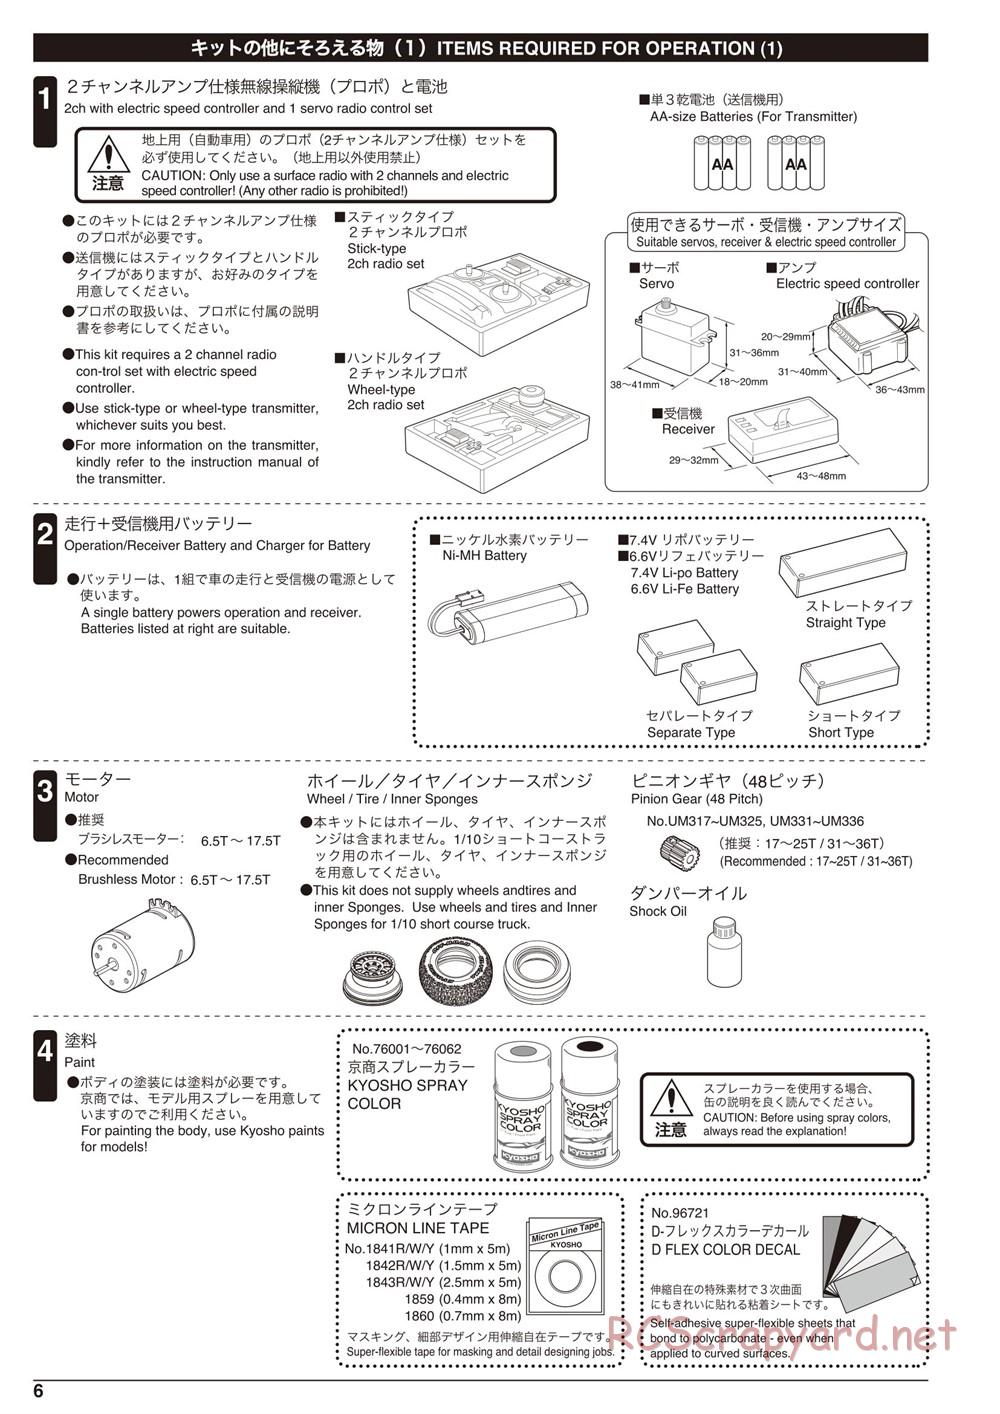 Kyosho - Ultima SC6 - Manual - Page 6